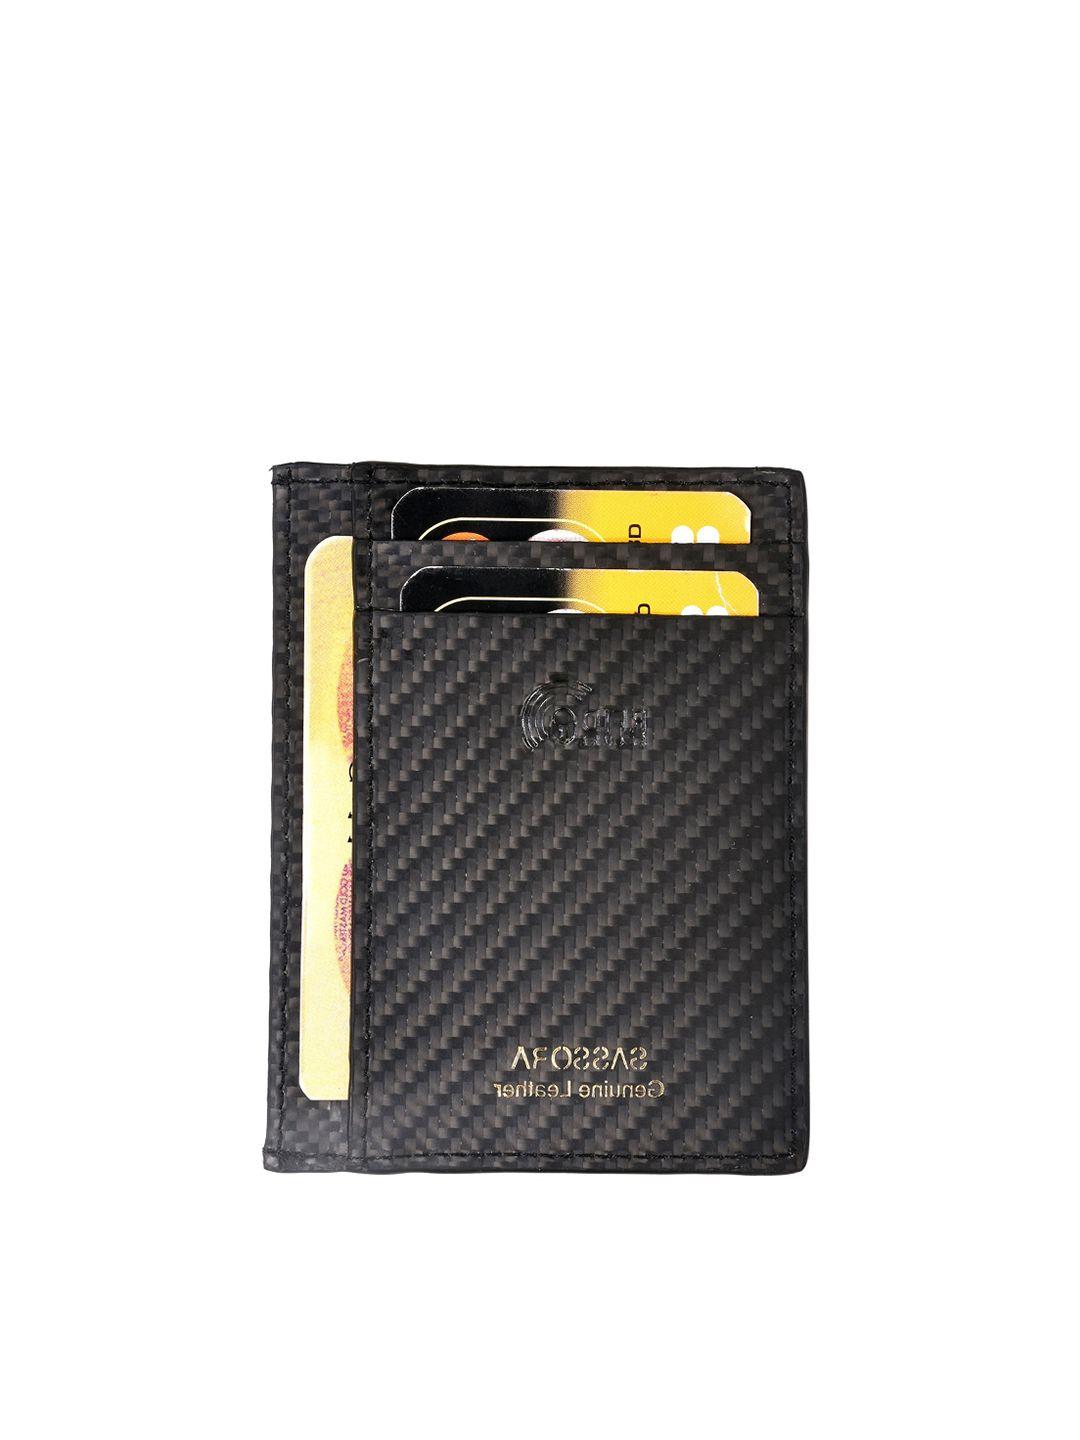 sassora textured leather card holder